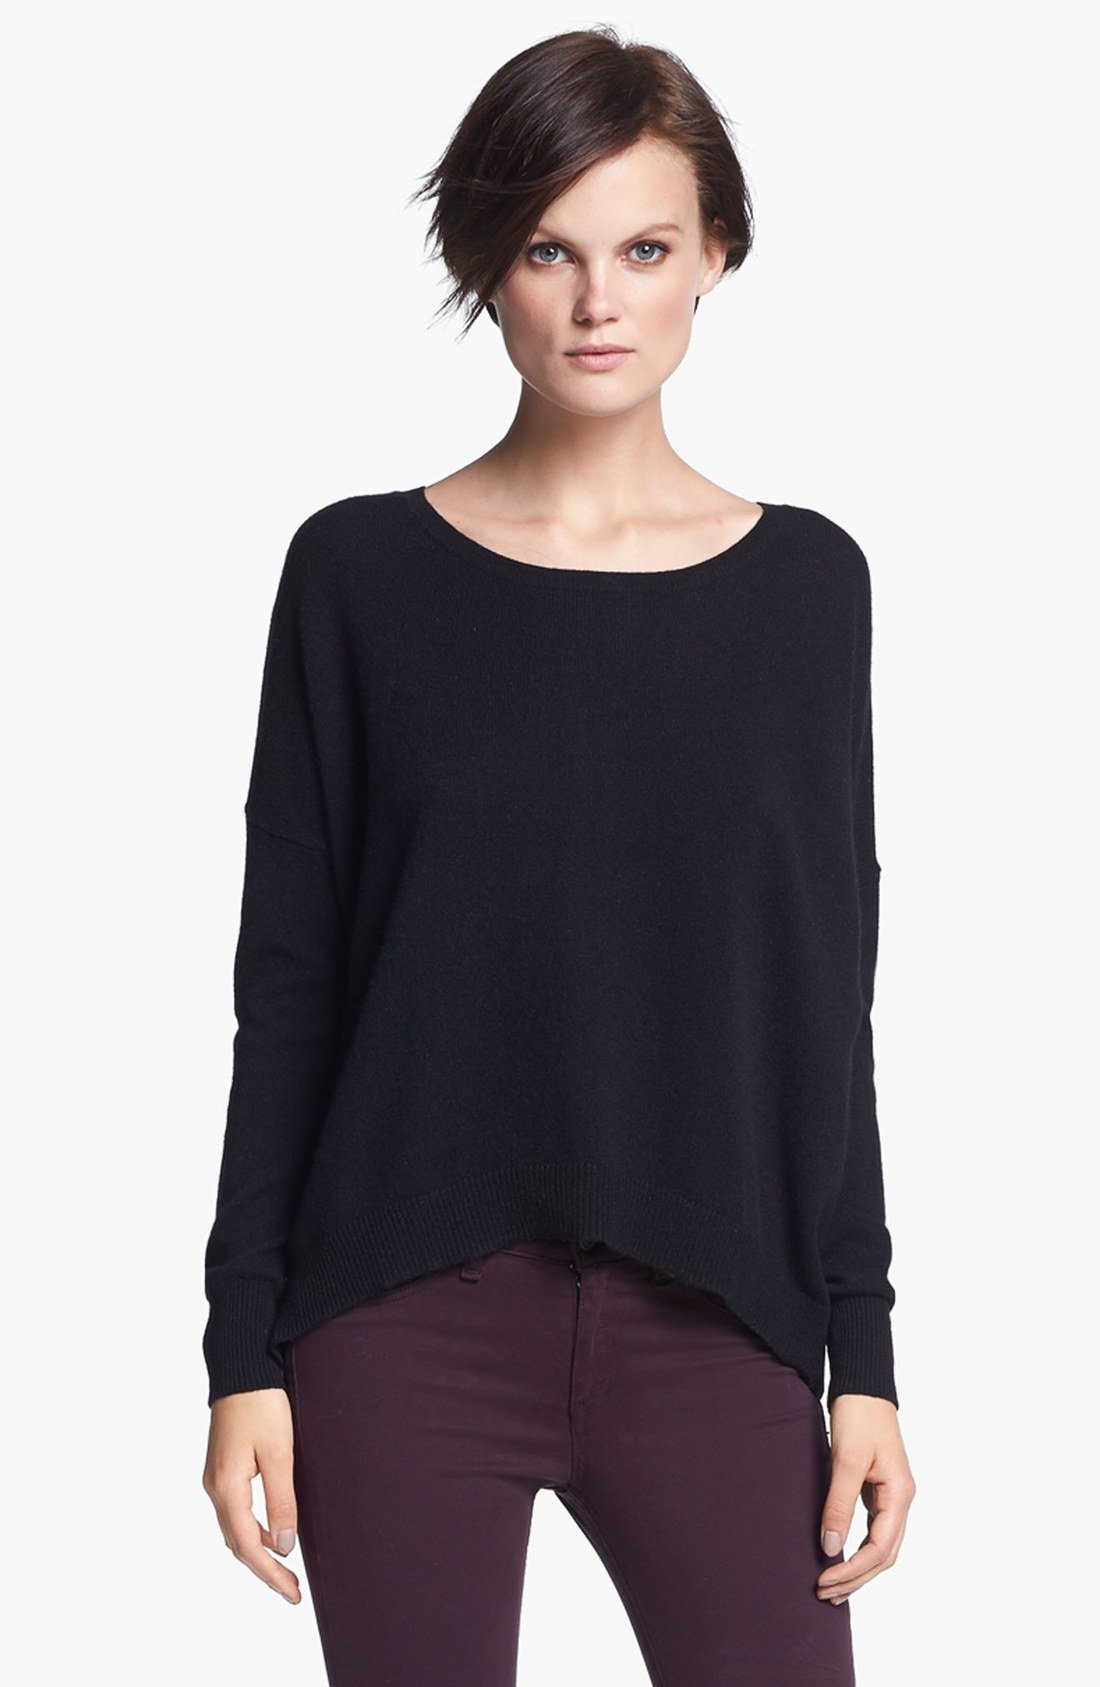 Autumn cashmere Back Zip Cashmere Sweater in Black | Lyst